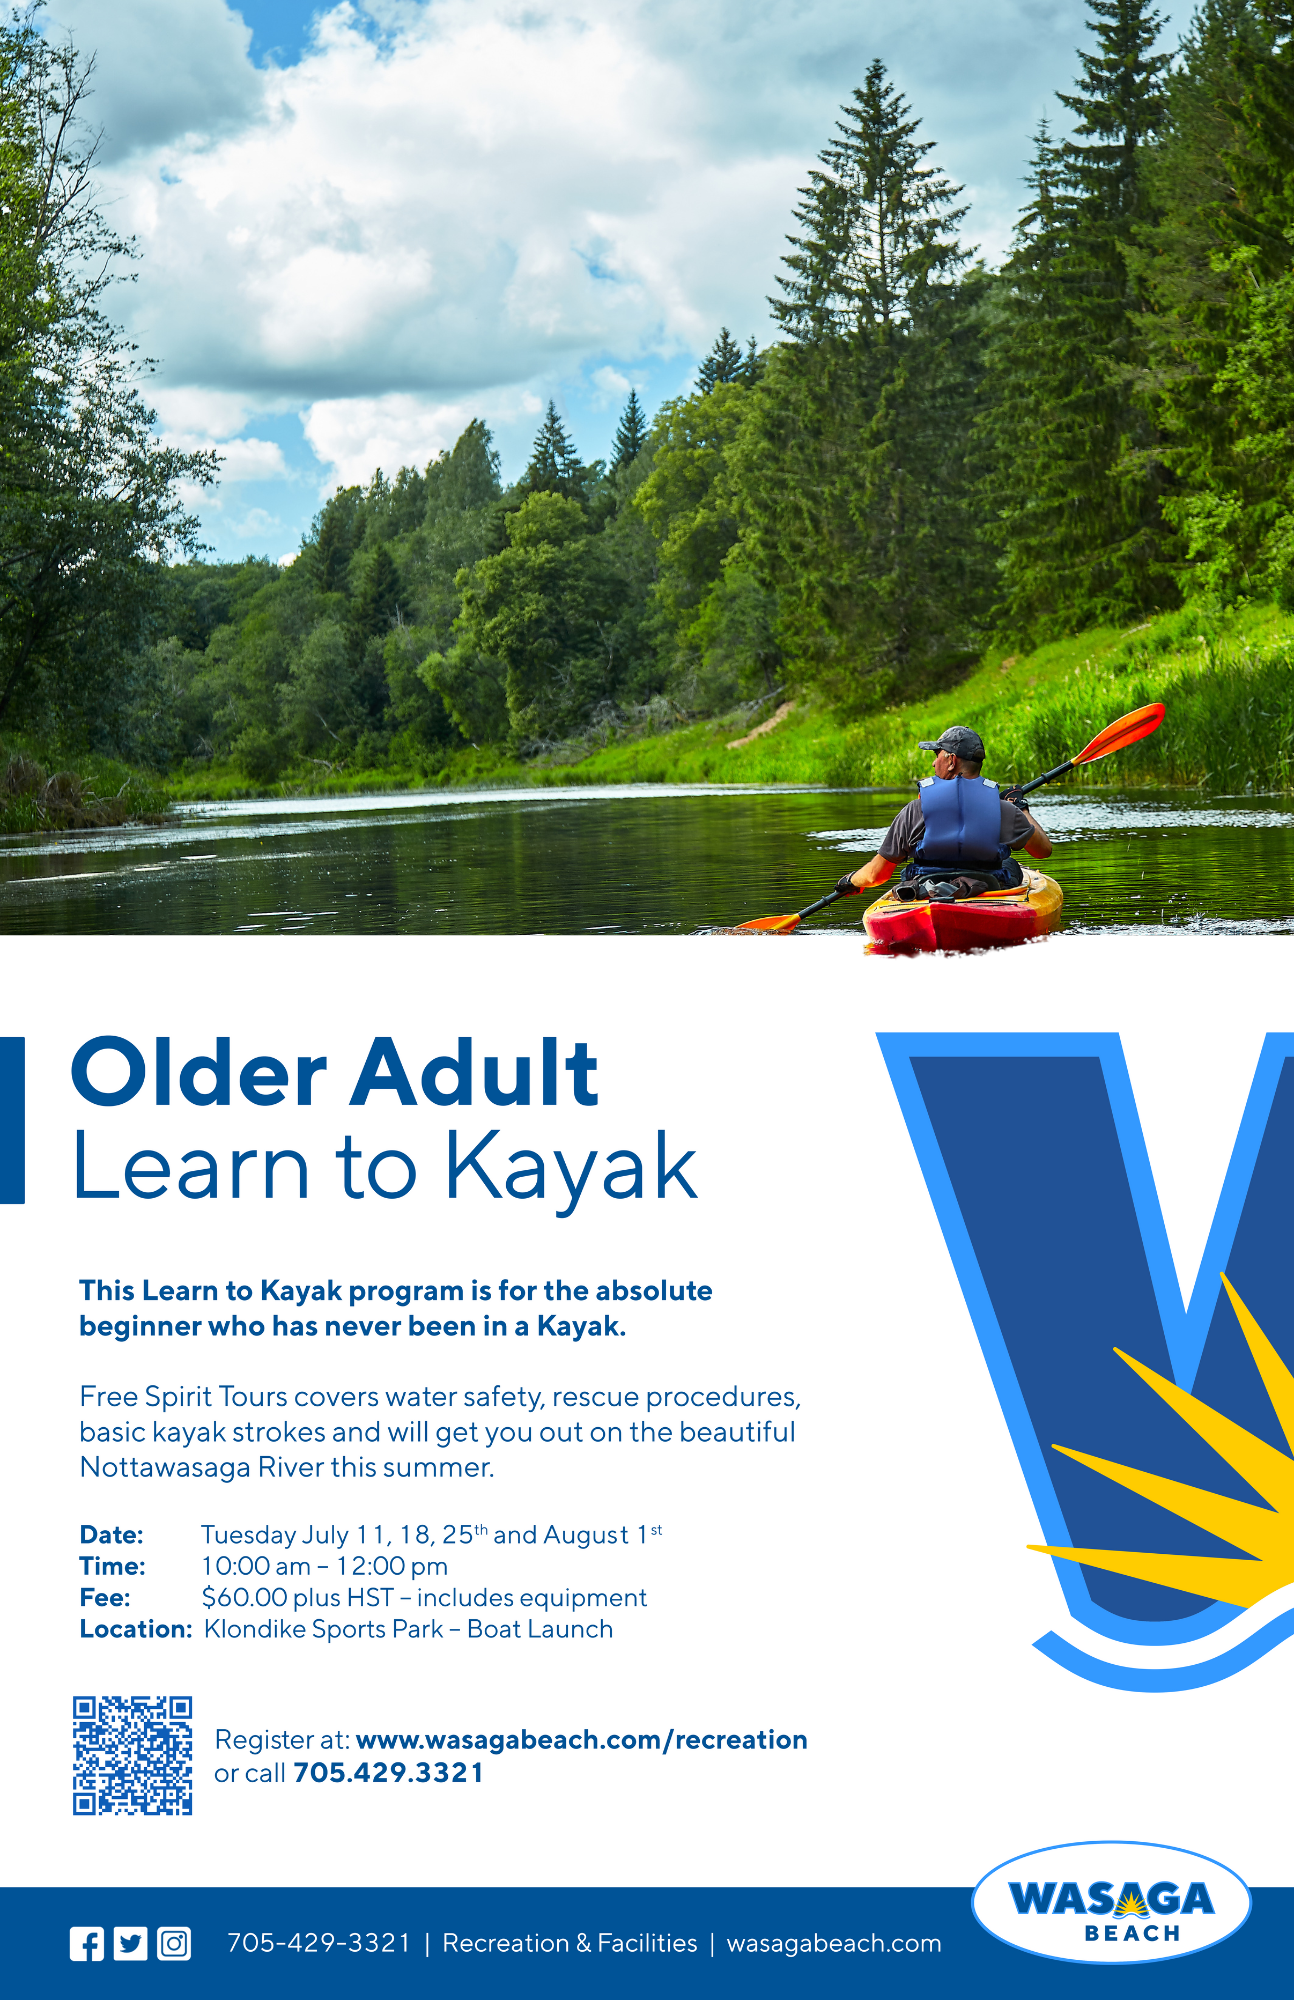 Older Adult Kayaking